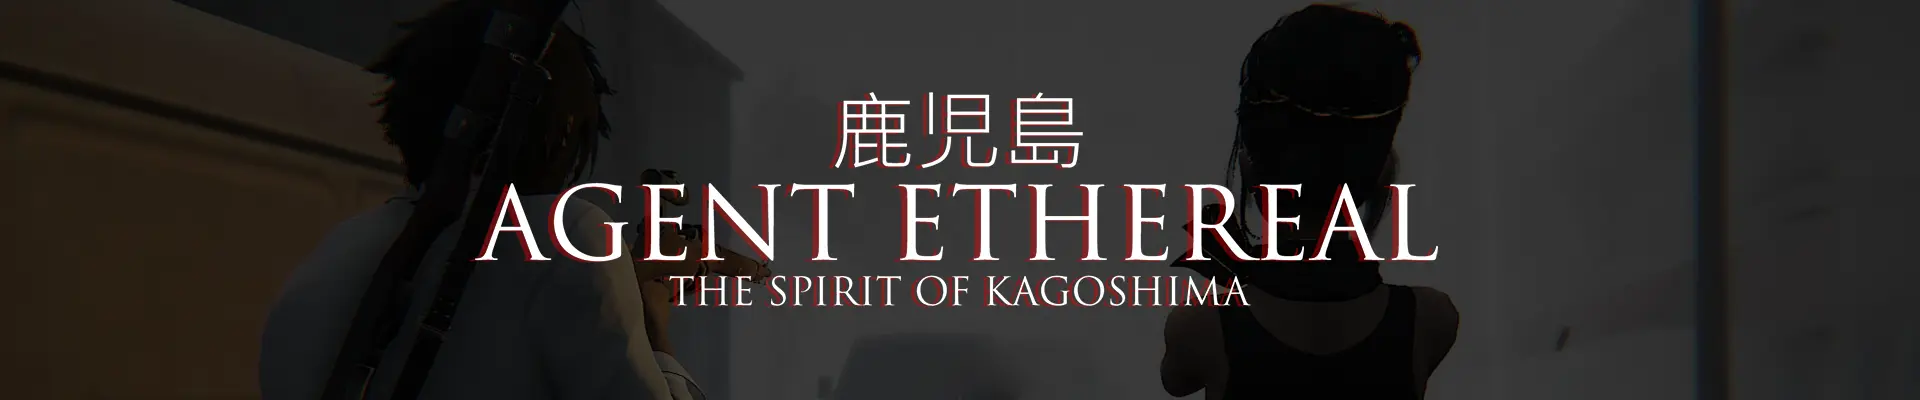 Agent Ethereal - The Spirit of Kagoshima main image